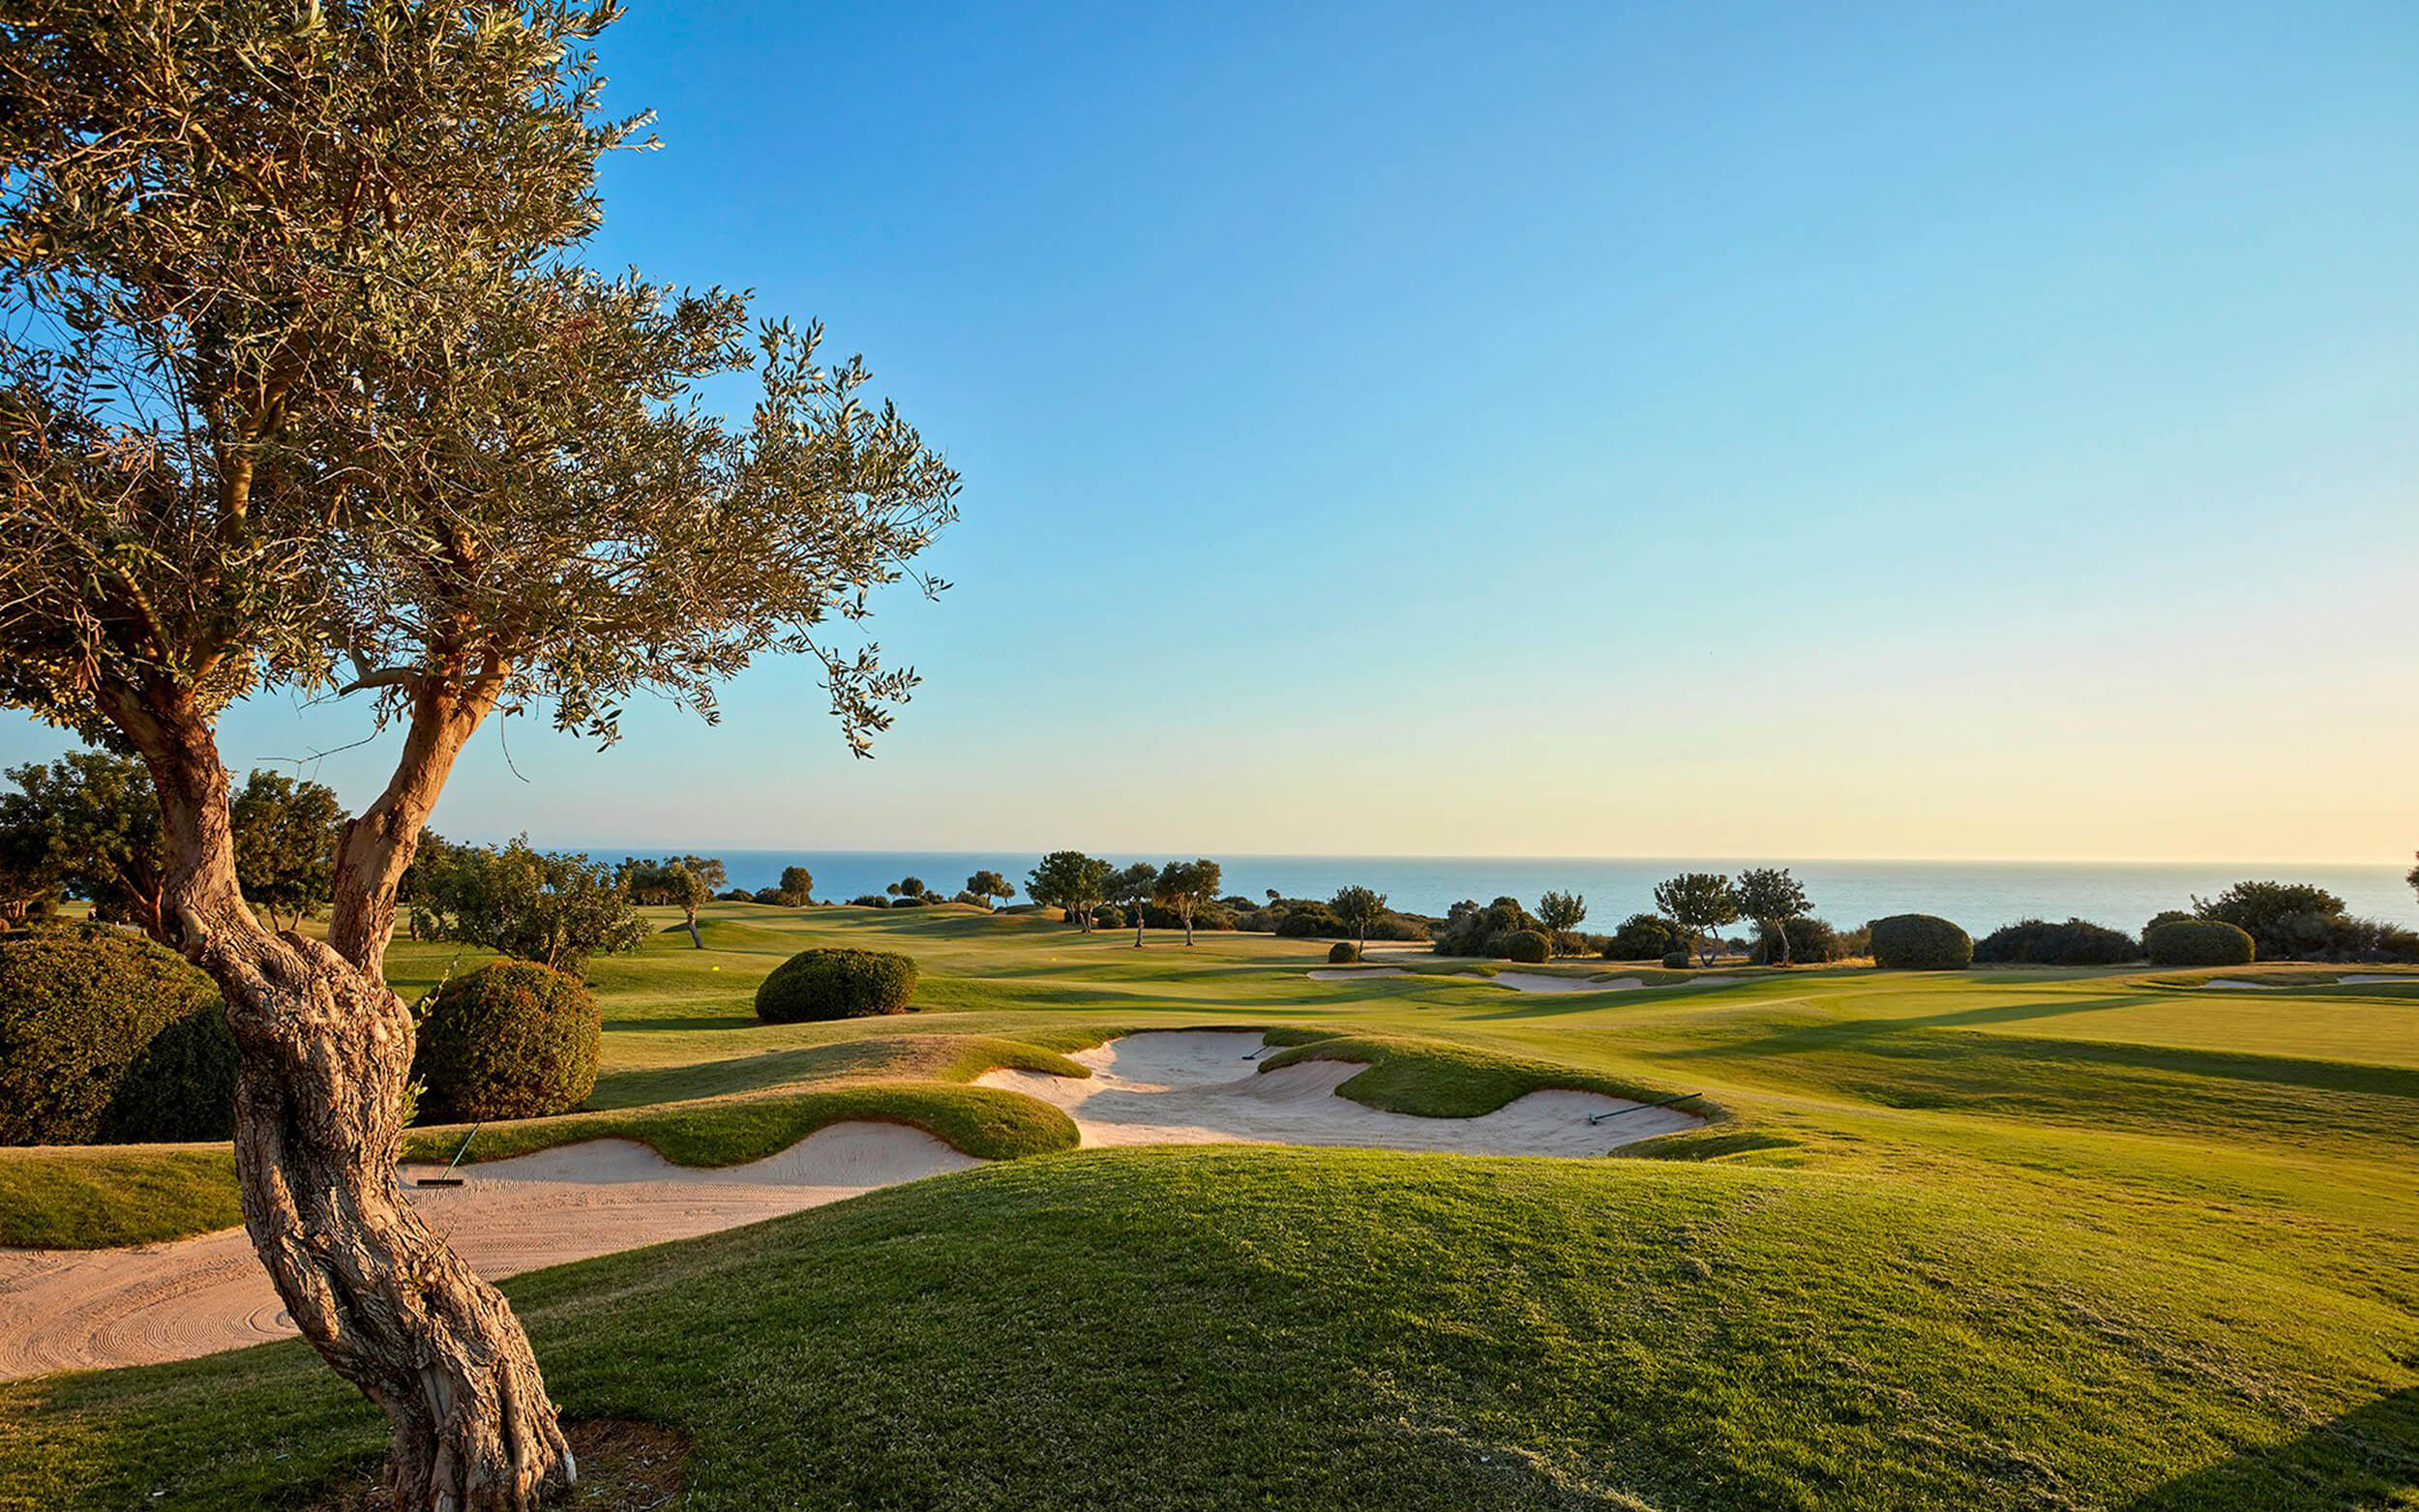 Cyprus PGA national golf course